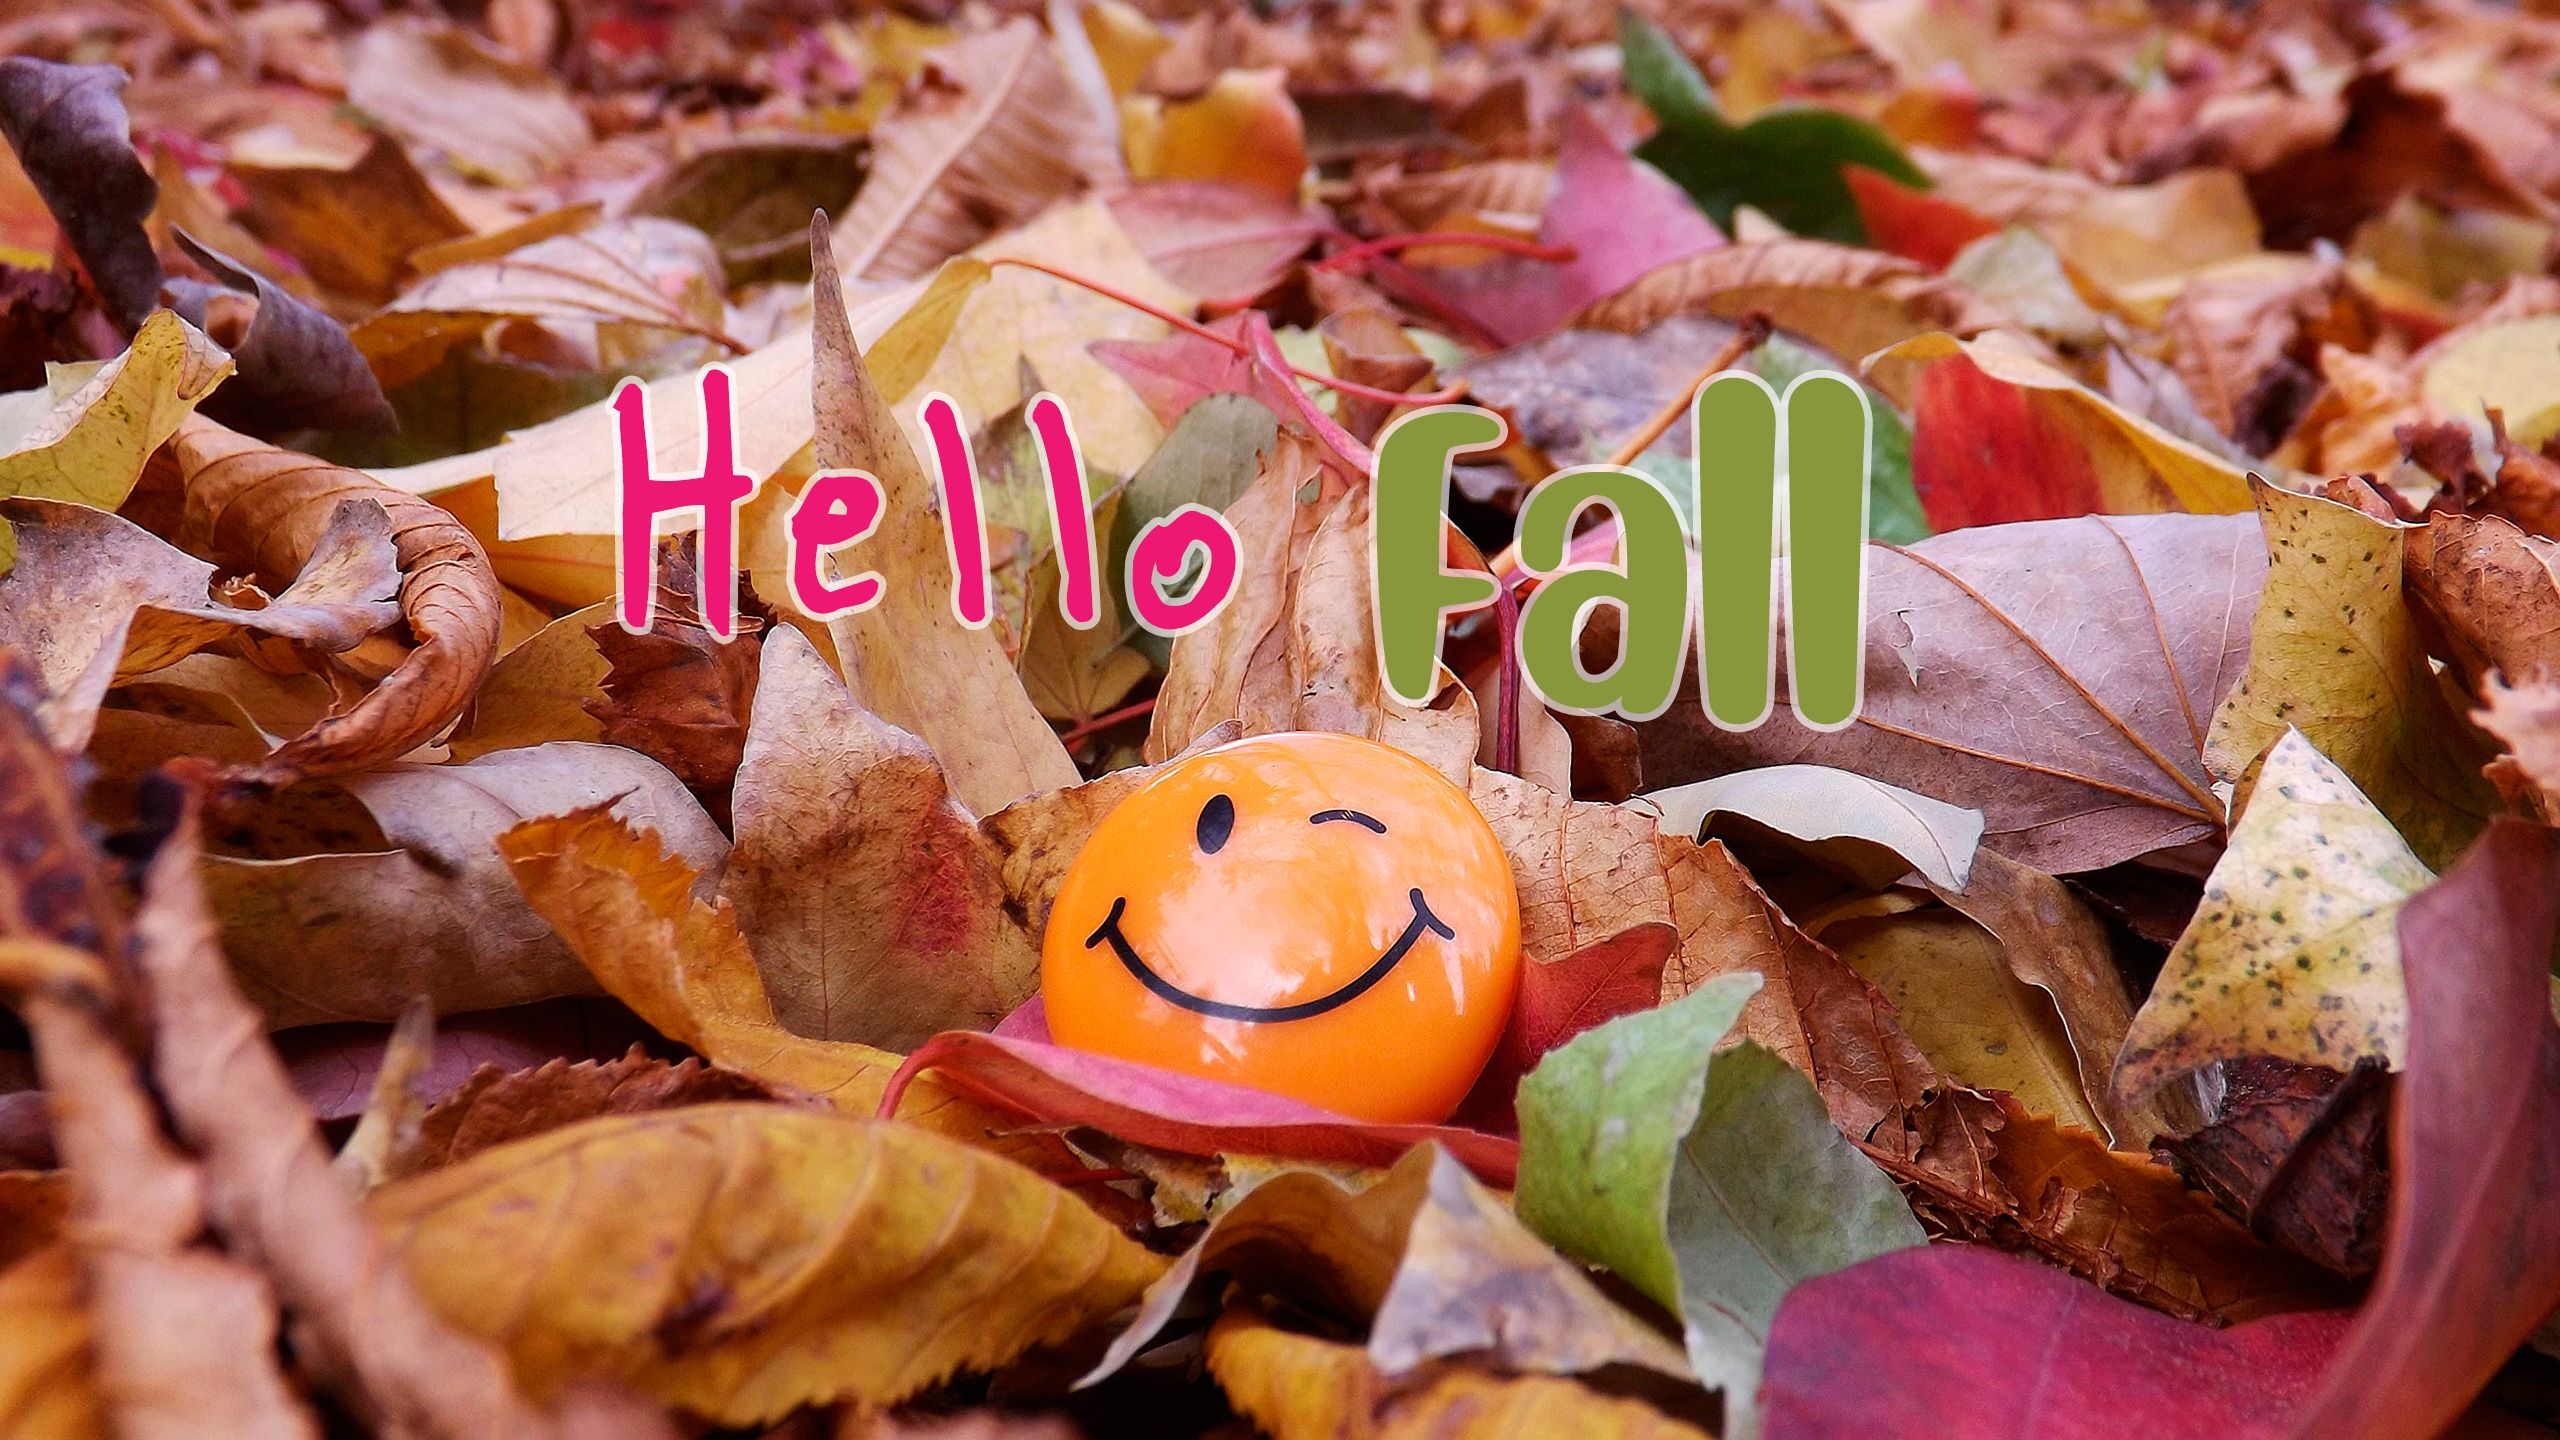 Cute new Hello Fall image